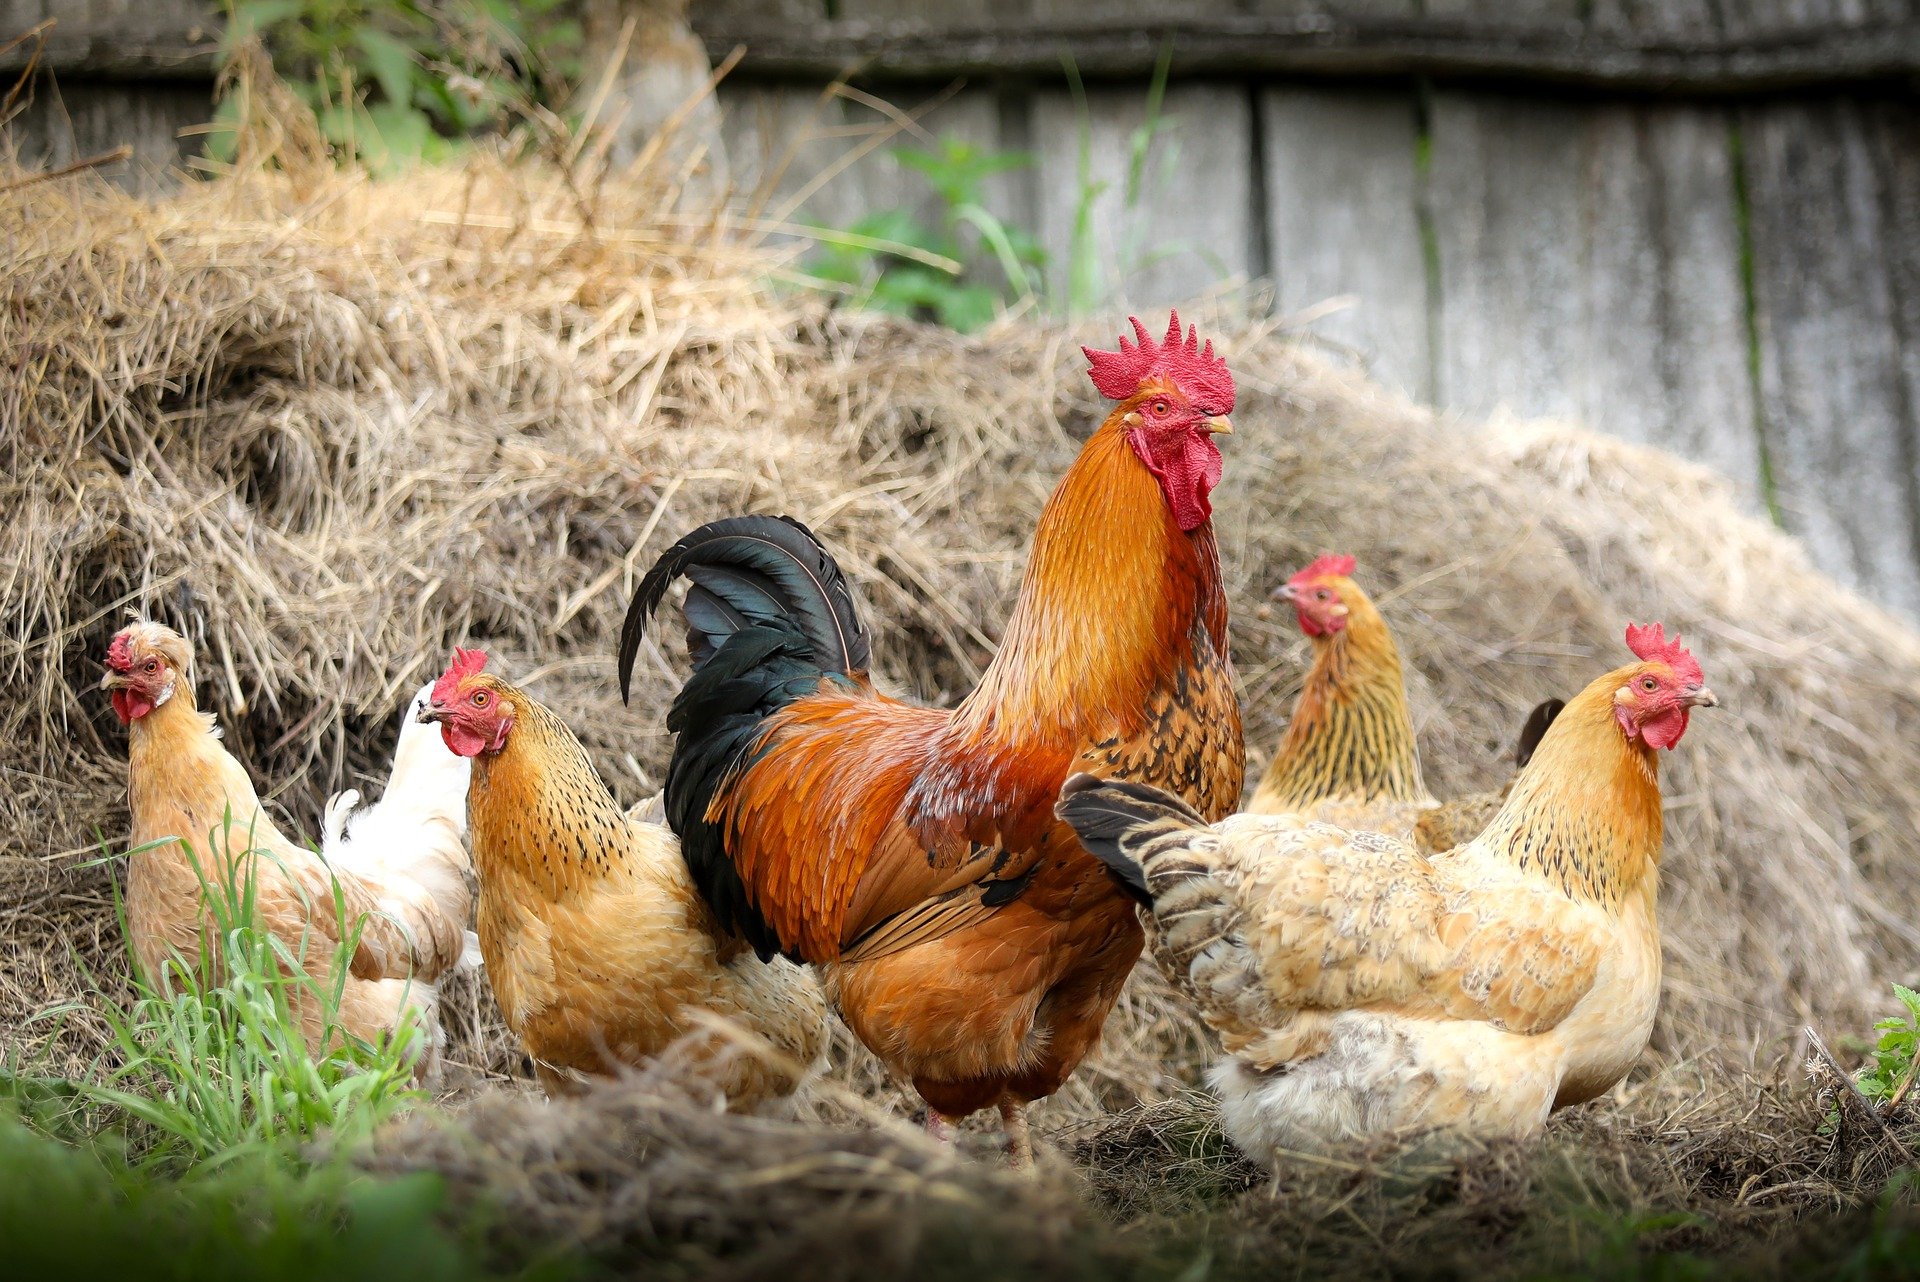 每隻雞的品種不同，也讓牠們的身型有所差異。Different breeds of chickens also come in different sizes. (Photo / Retrieved from Pixabay)